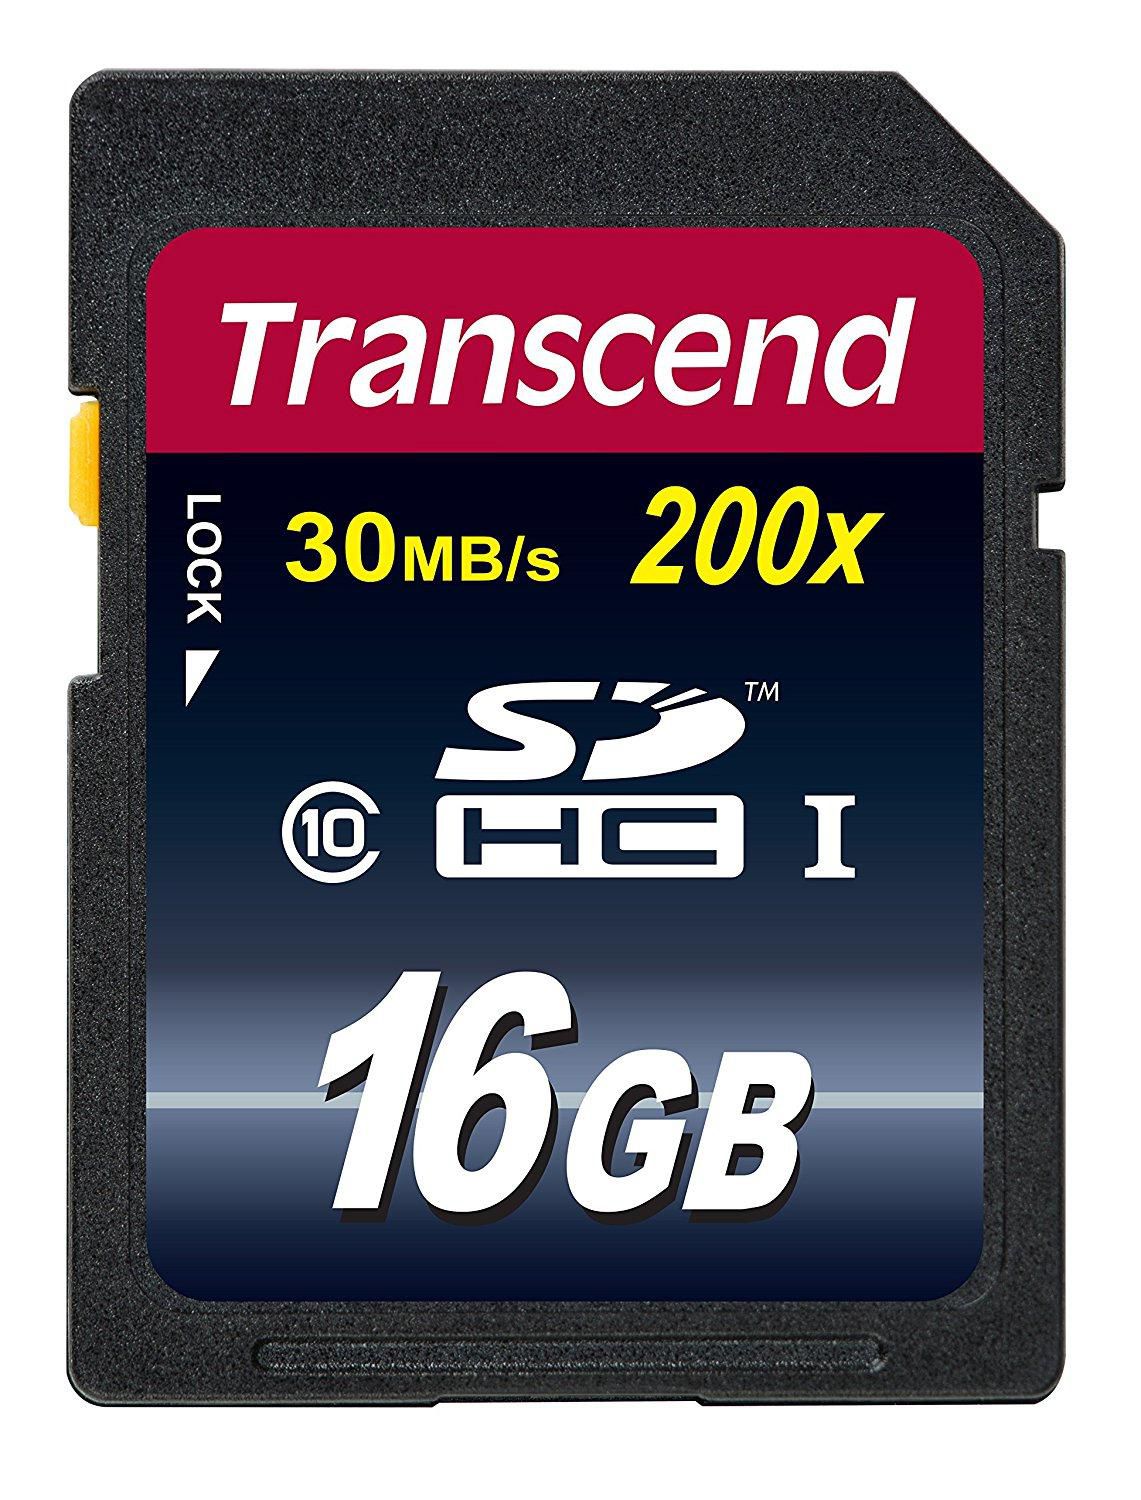 Transcend TS16GSDHC10 16GB SDHCCard, Blue 